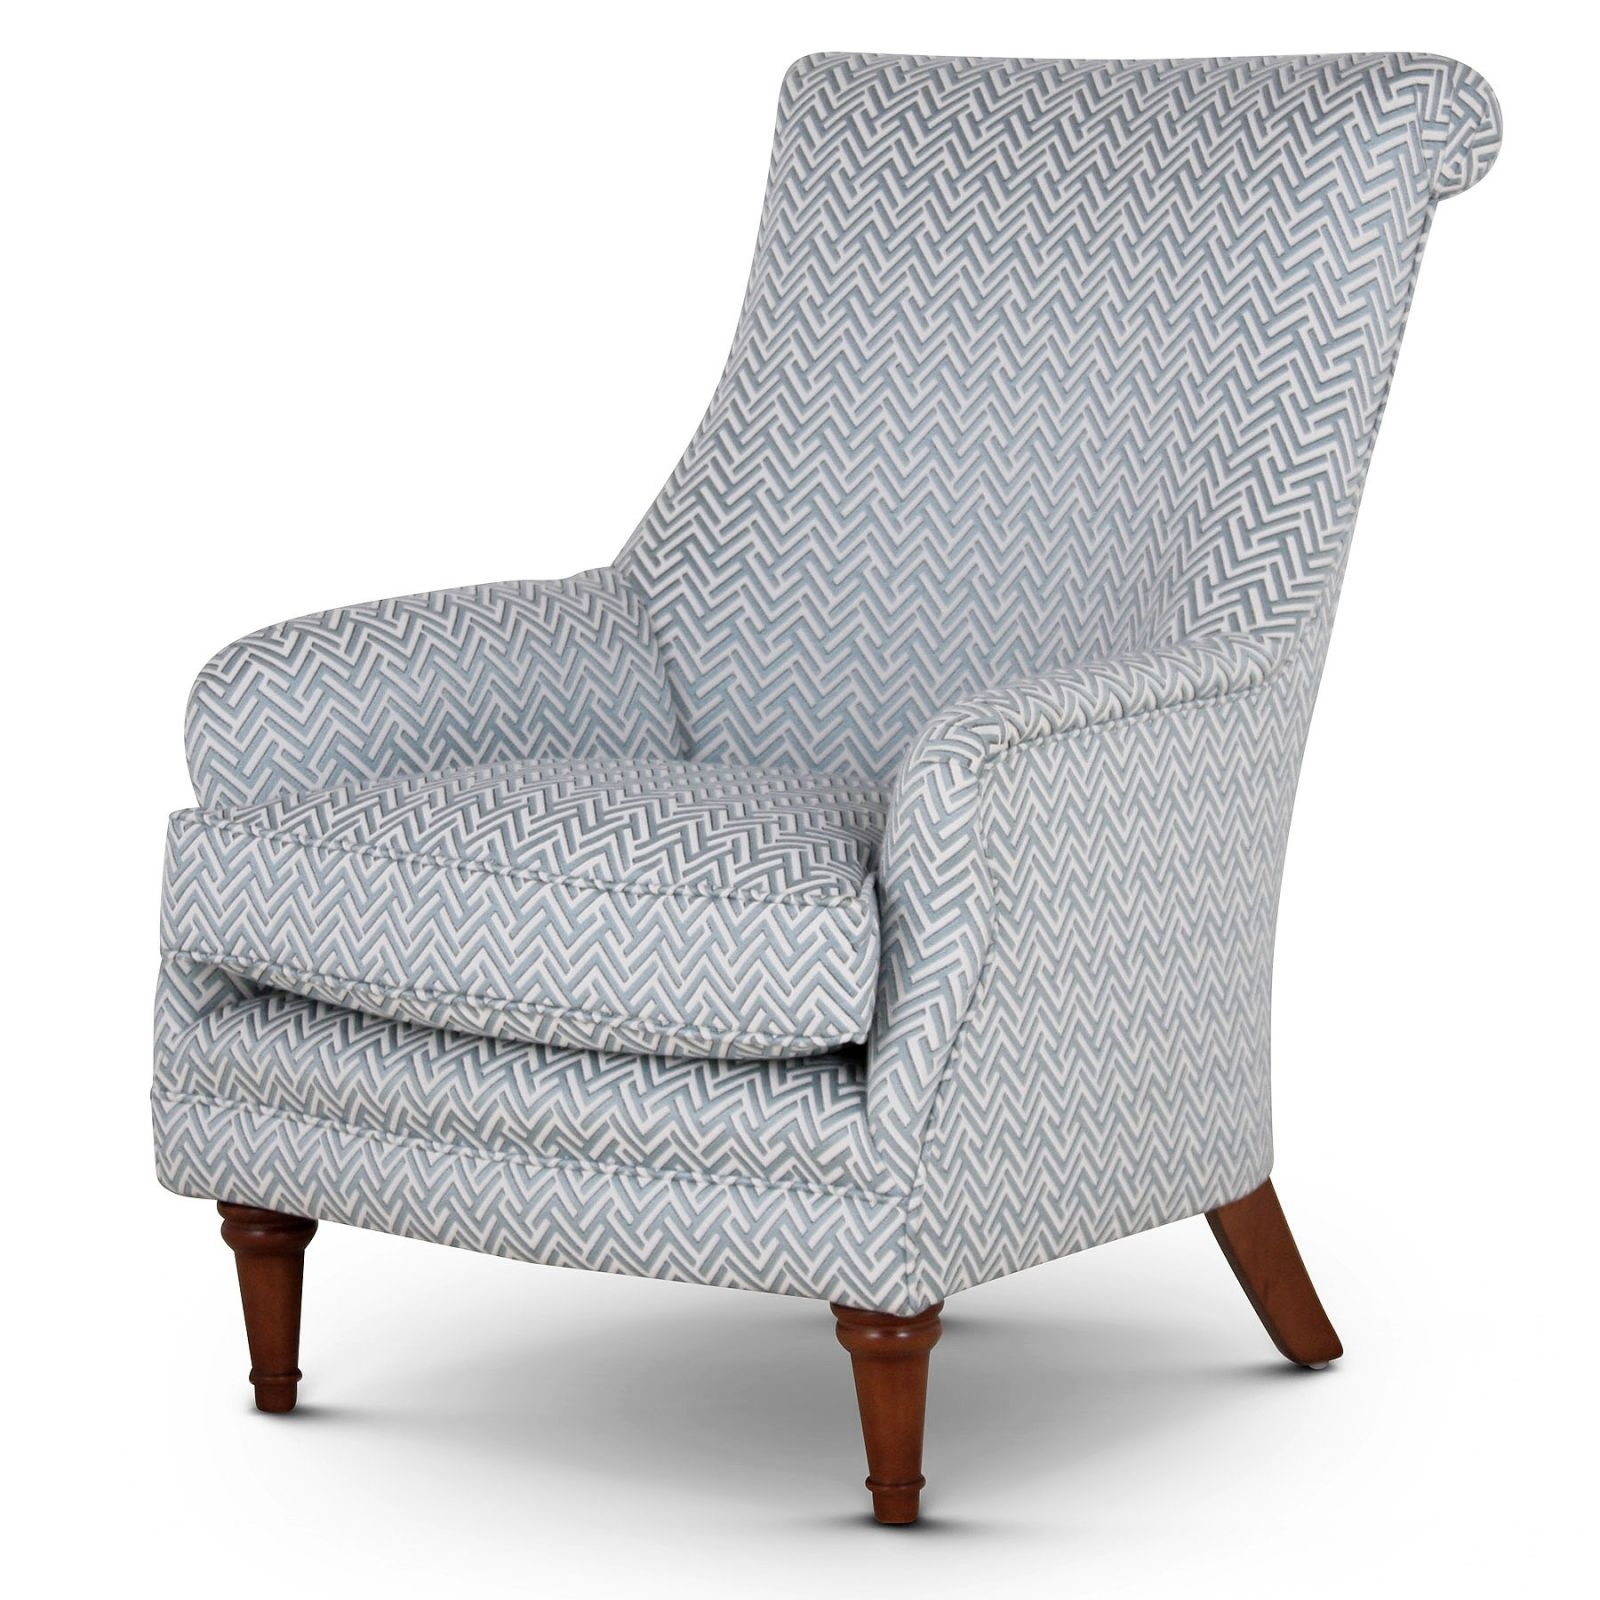 Swift bedroom or occasional chair in aqua blue geometric fabric